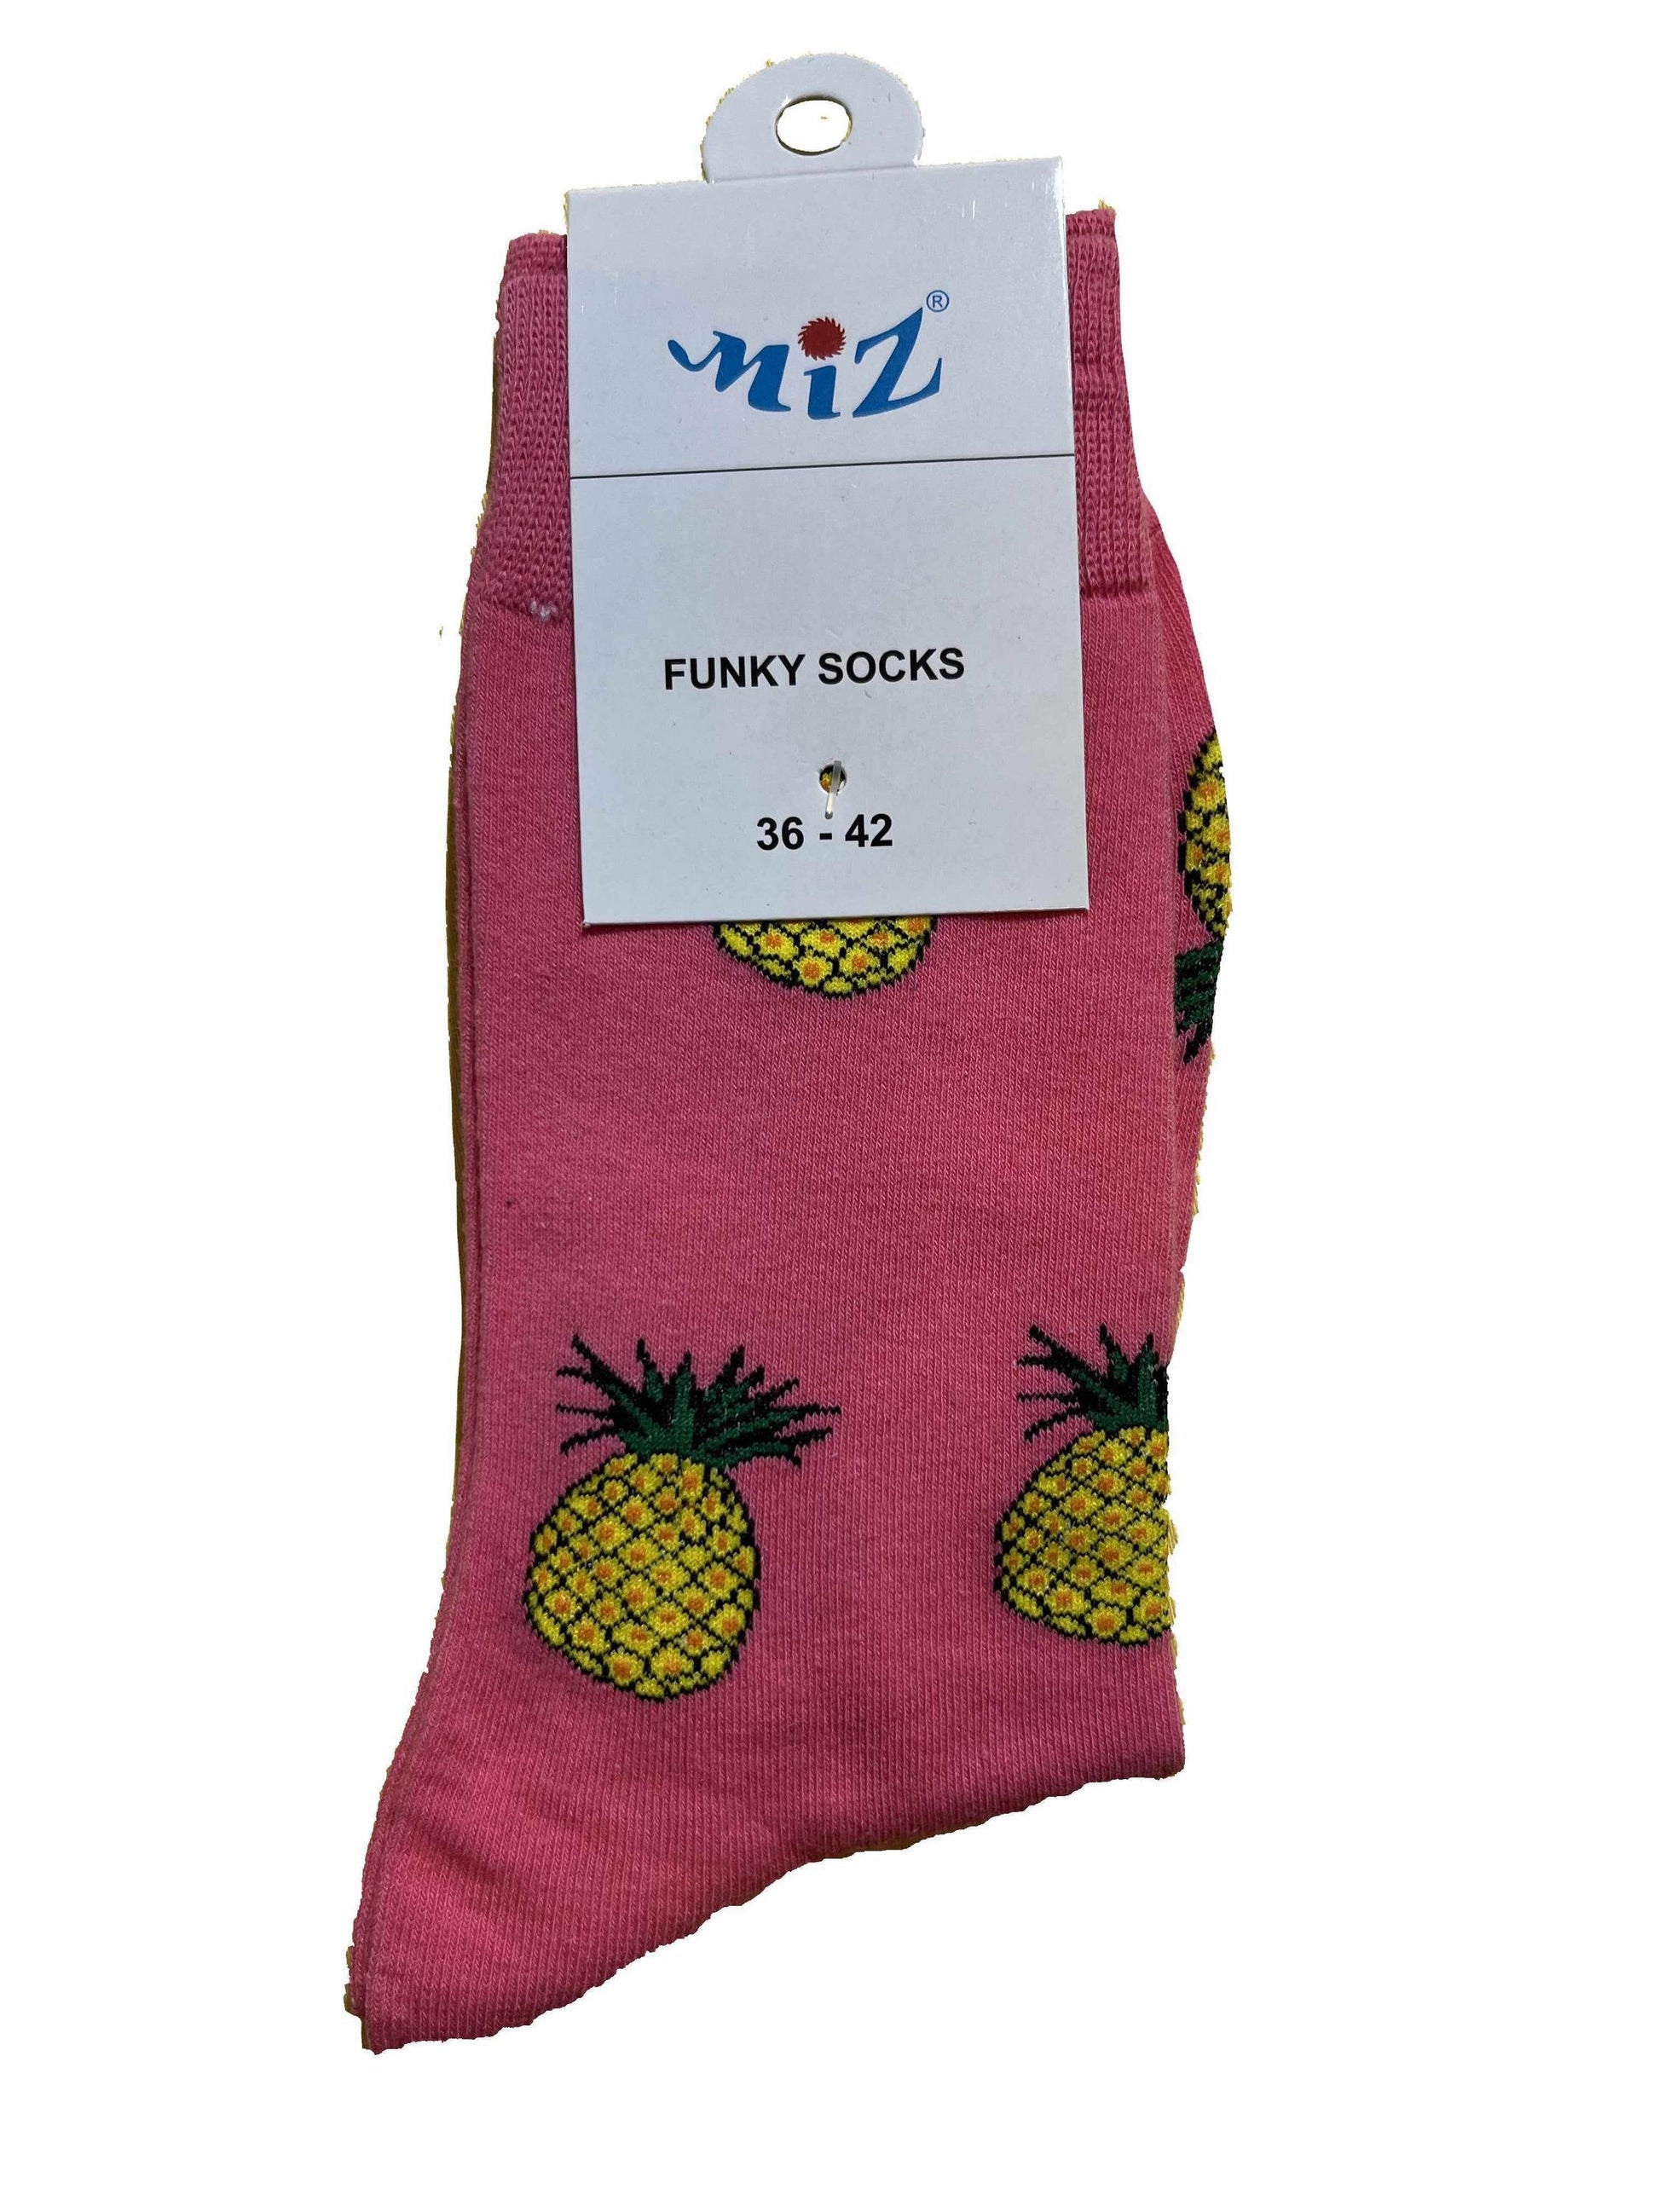 Funky compression socks, Funky hockey socks, Childrens hockey socks, Mens hockey socks, Mens hockey socks, Mens funky dress socks, Mens patterned socksv